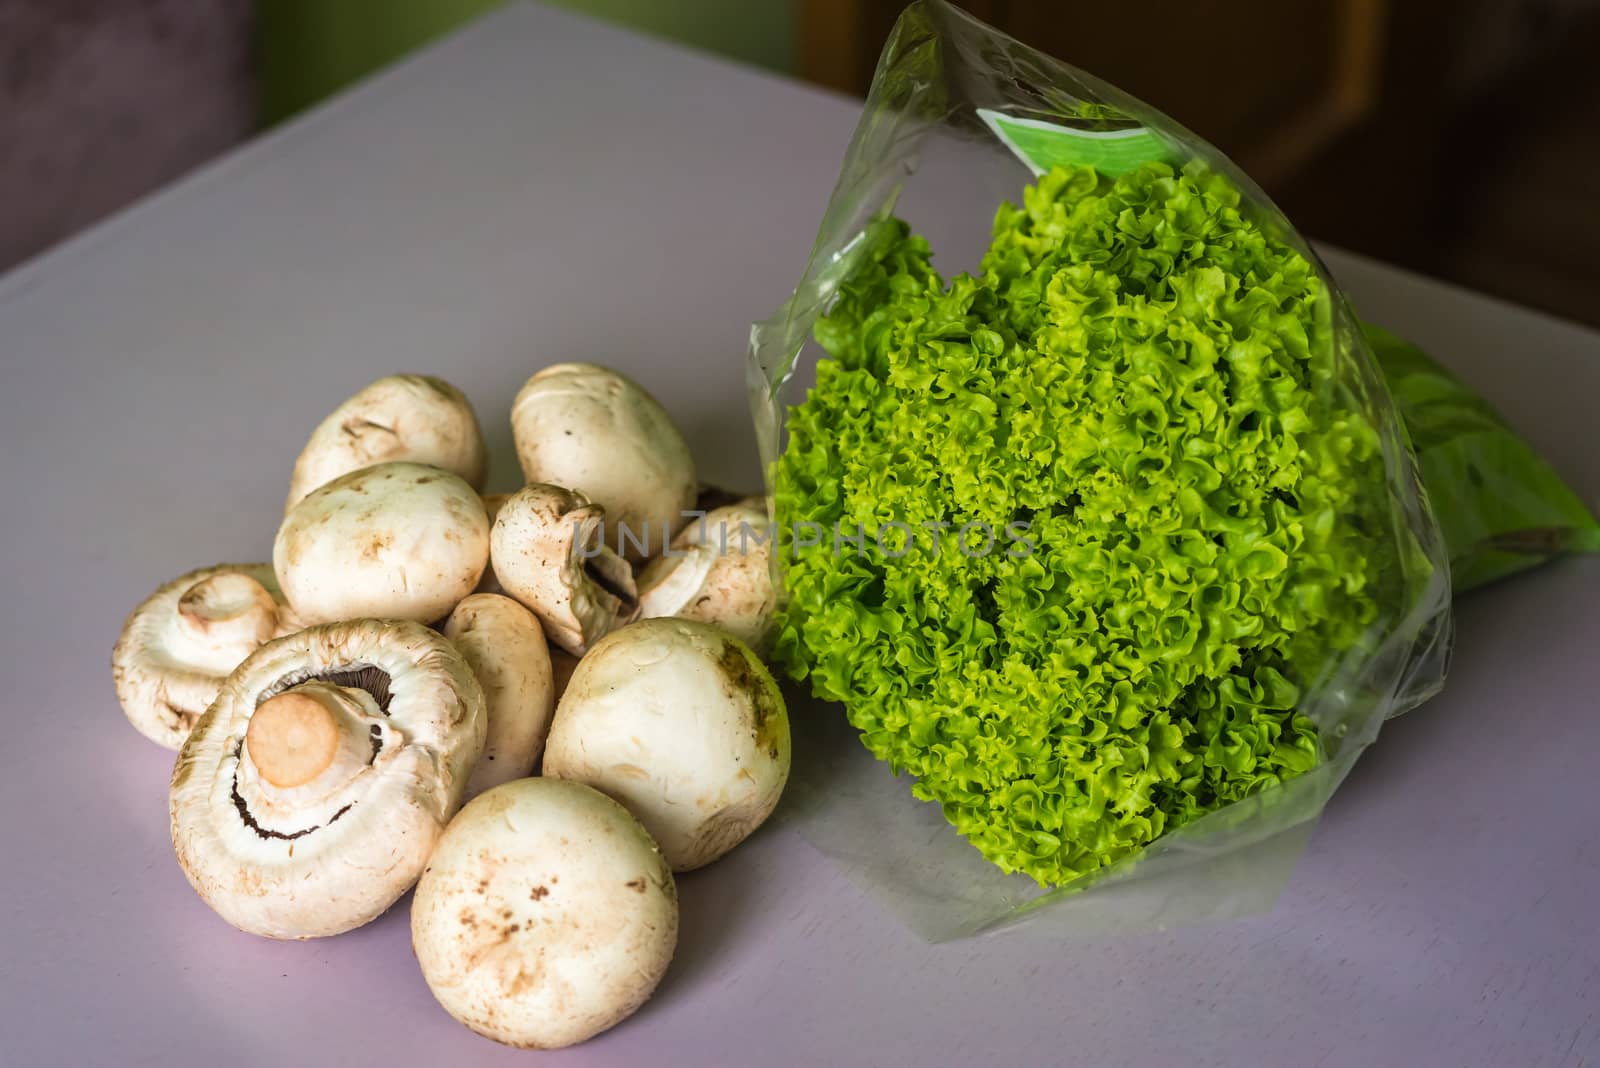 mushrooms and lettuce on a table by okskukuruza